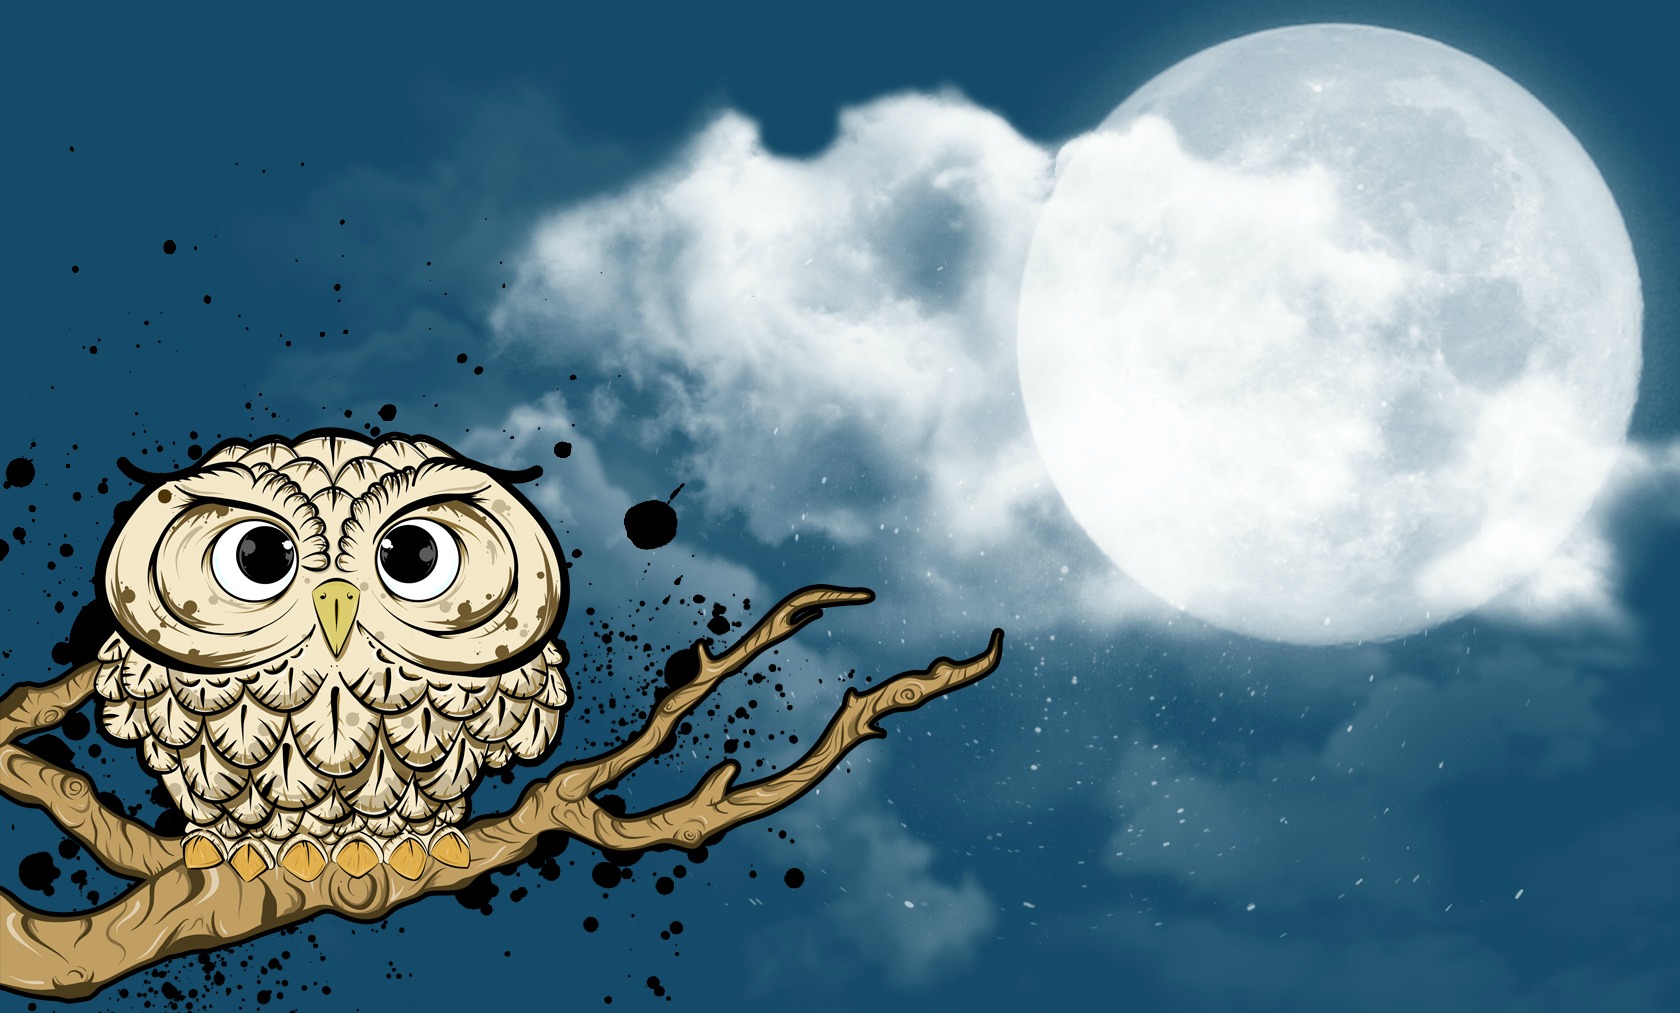 Owl Wallpaper Background